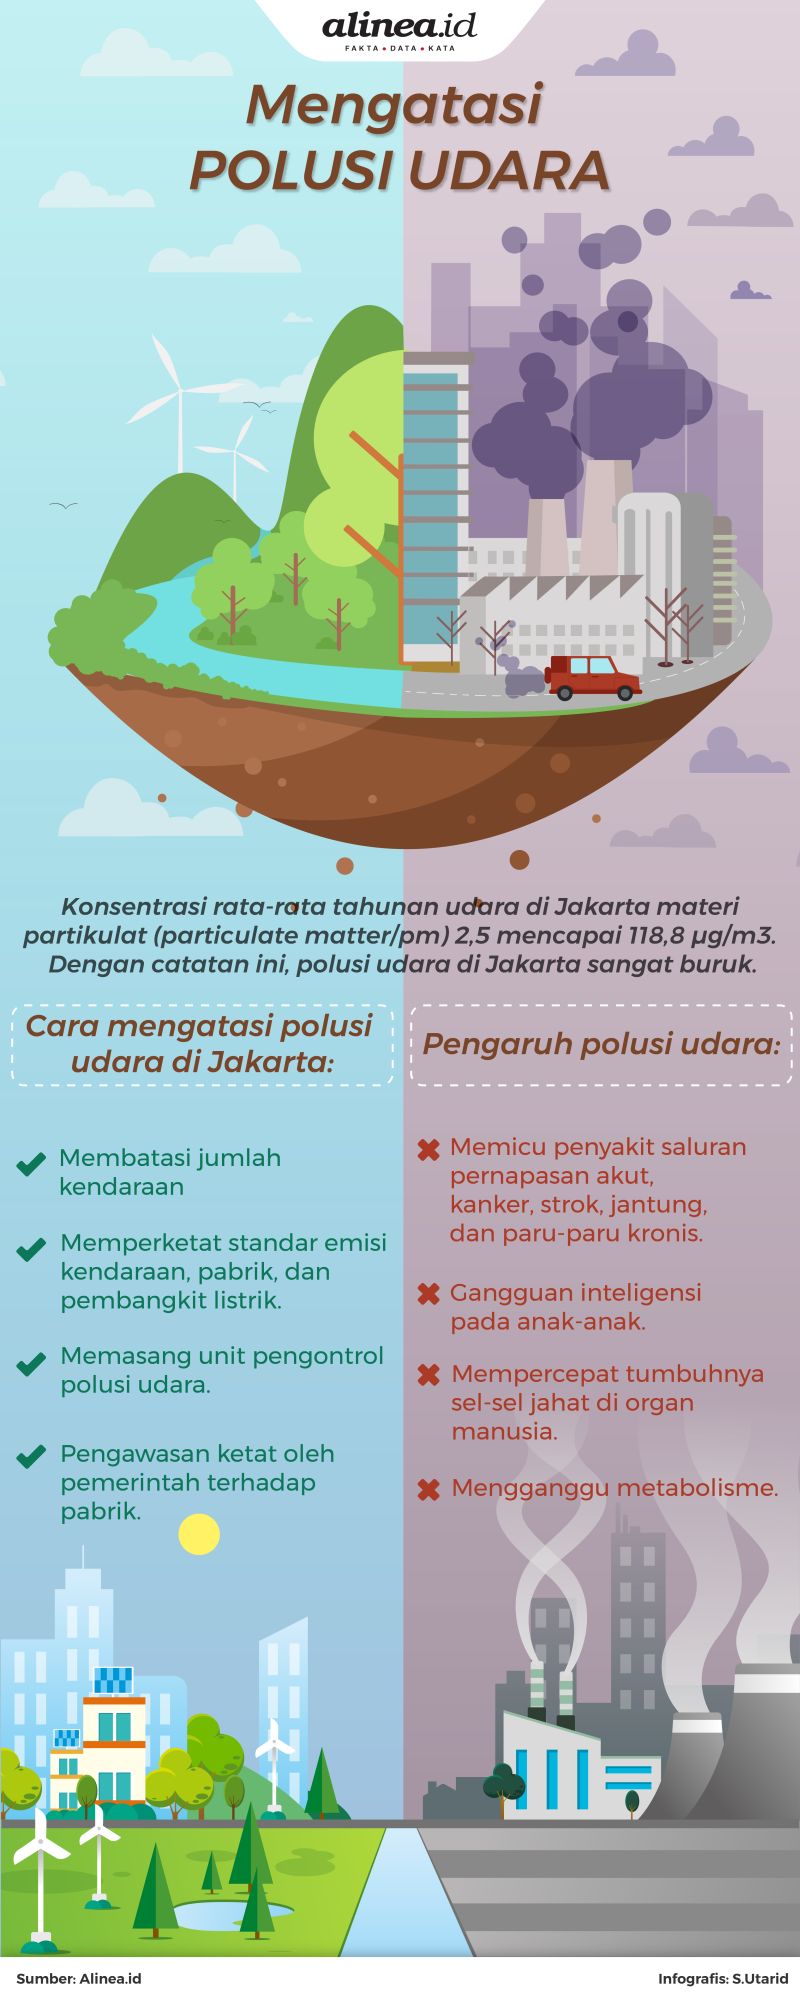 Infografik Alinea.id/S. Utarid